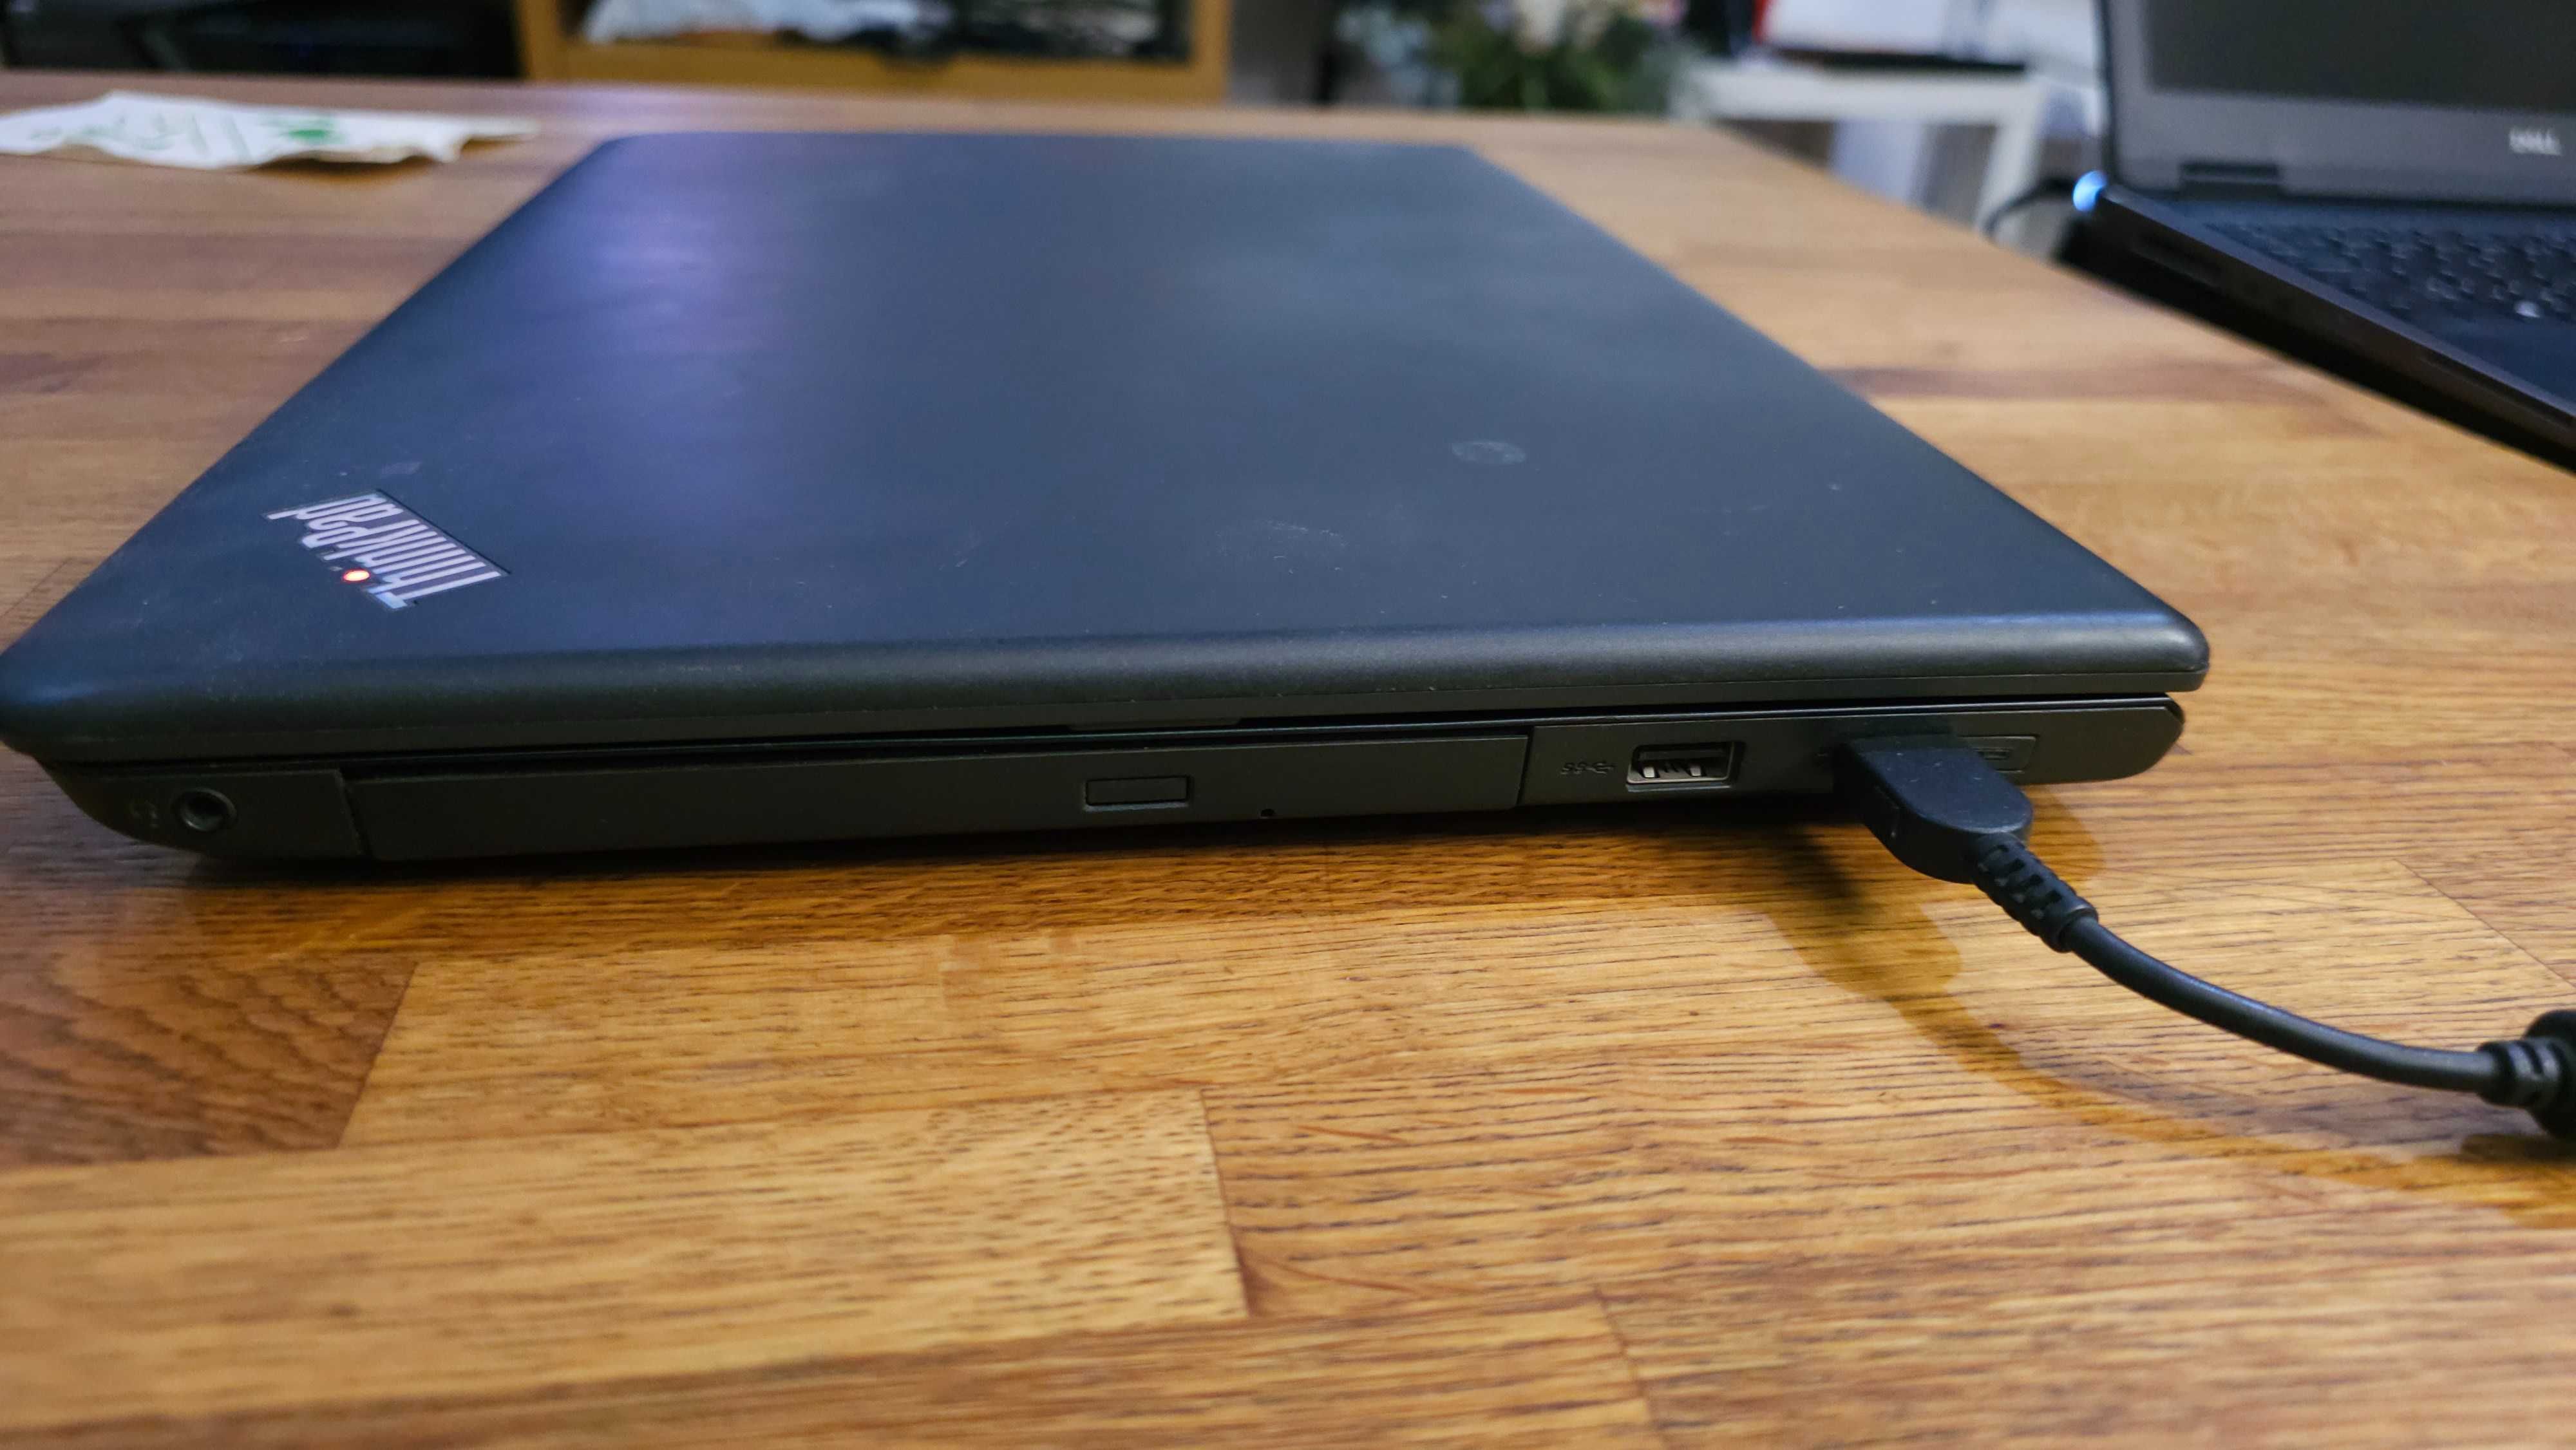 Lenovo ThinkPad E560 16Gb RAM intel I5-6200U CPU 2.3 GHz 2.4Ghz